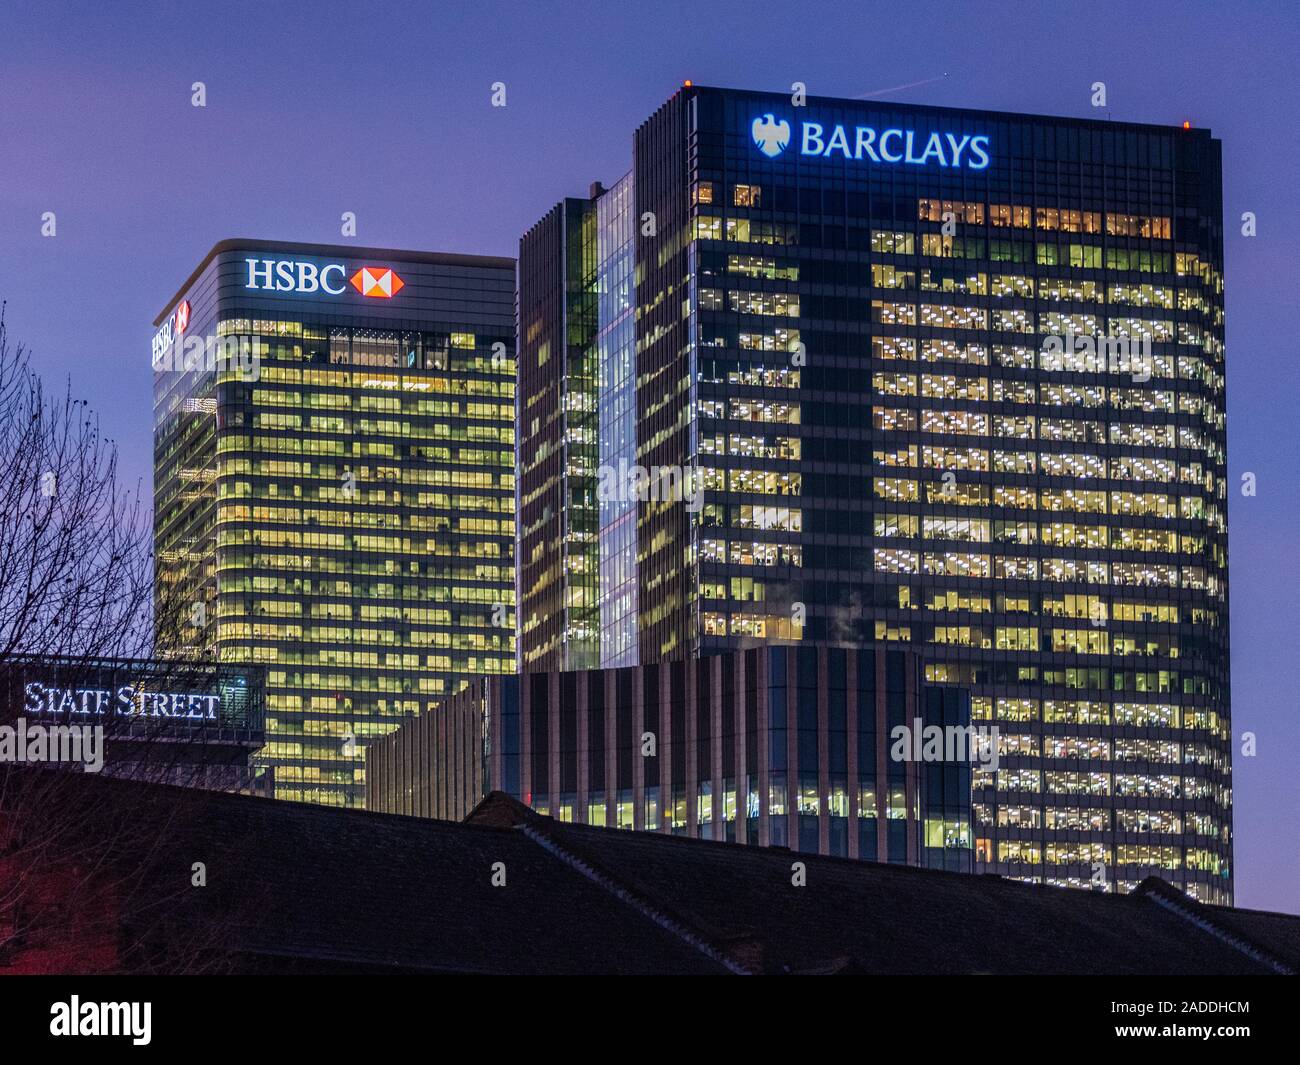 London Banks Canary Wharf. HSBC Tower and Barclays Tower in the Canary Wharf development London Stock Photo